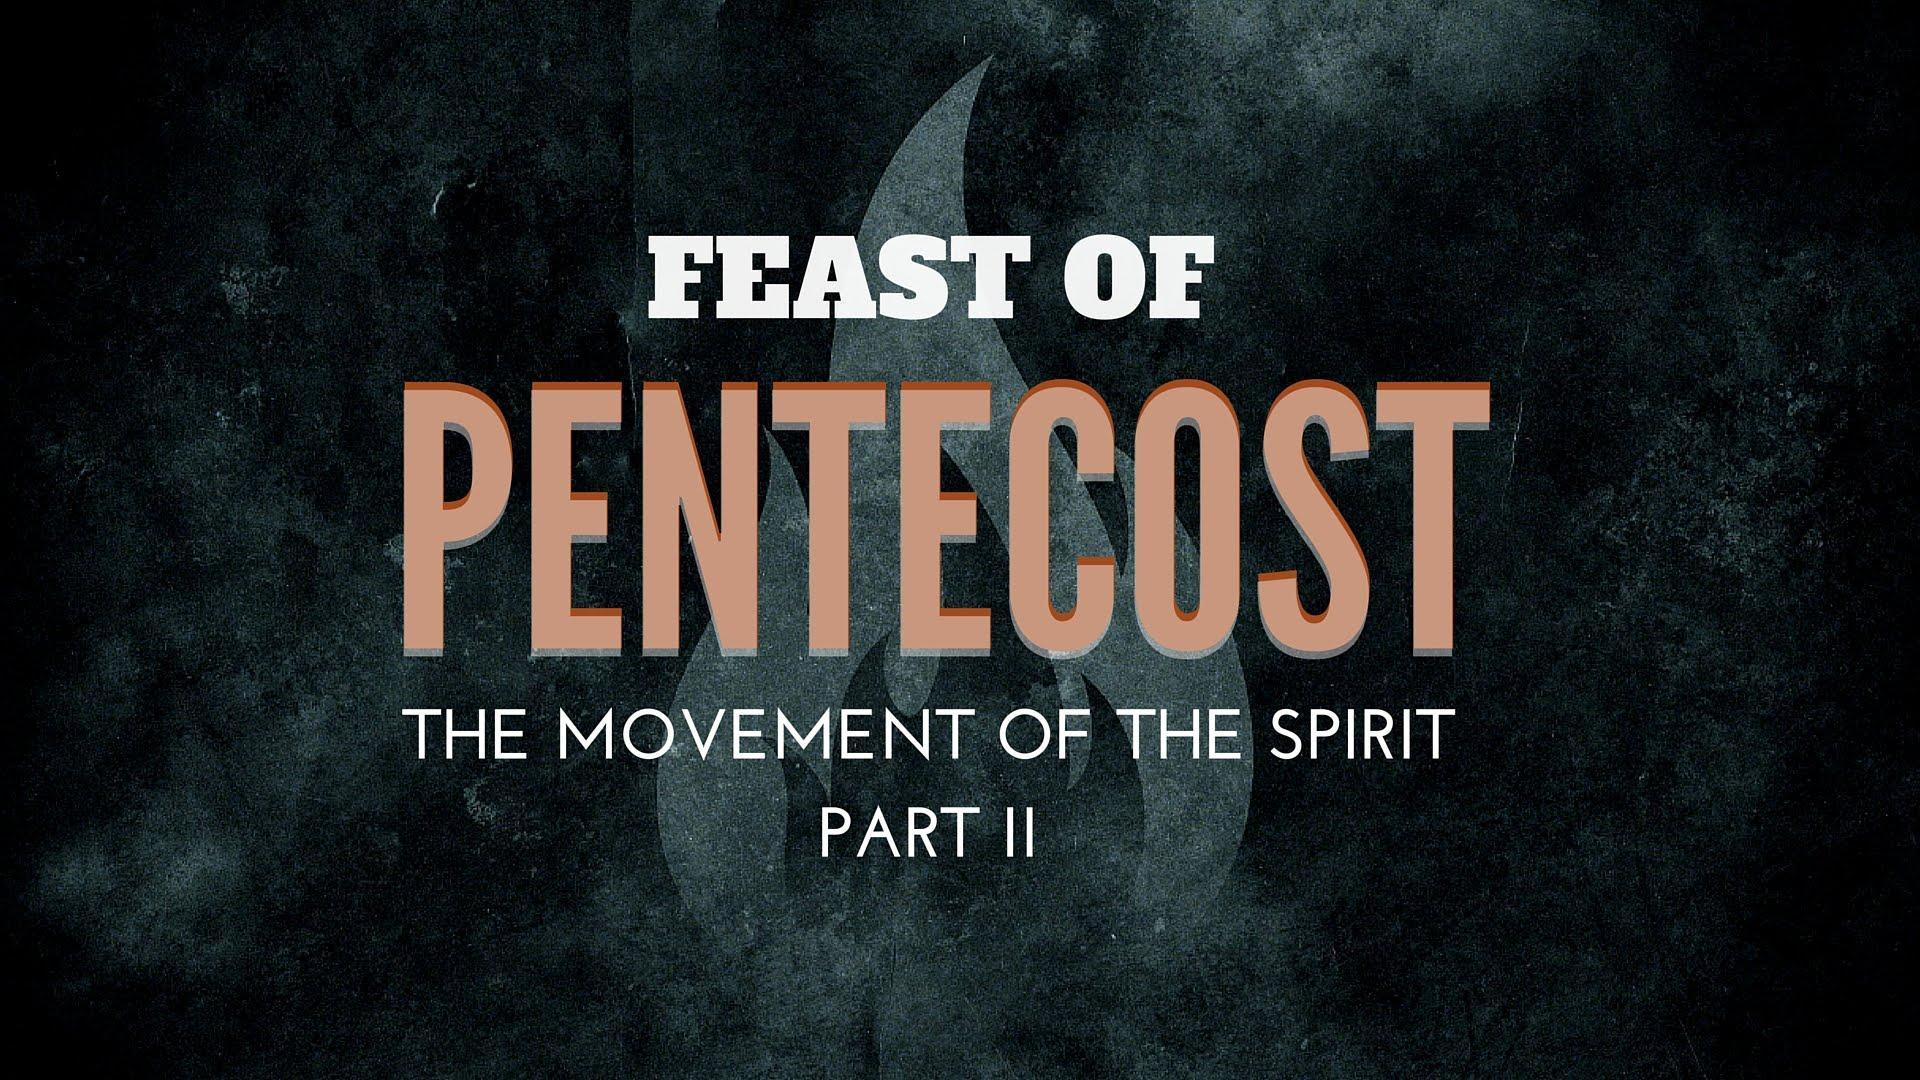 Feast of Pentecost Movement of the Spirit 2 14